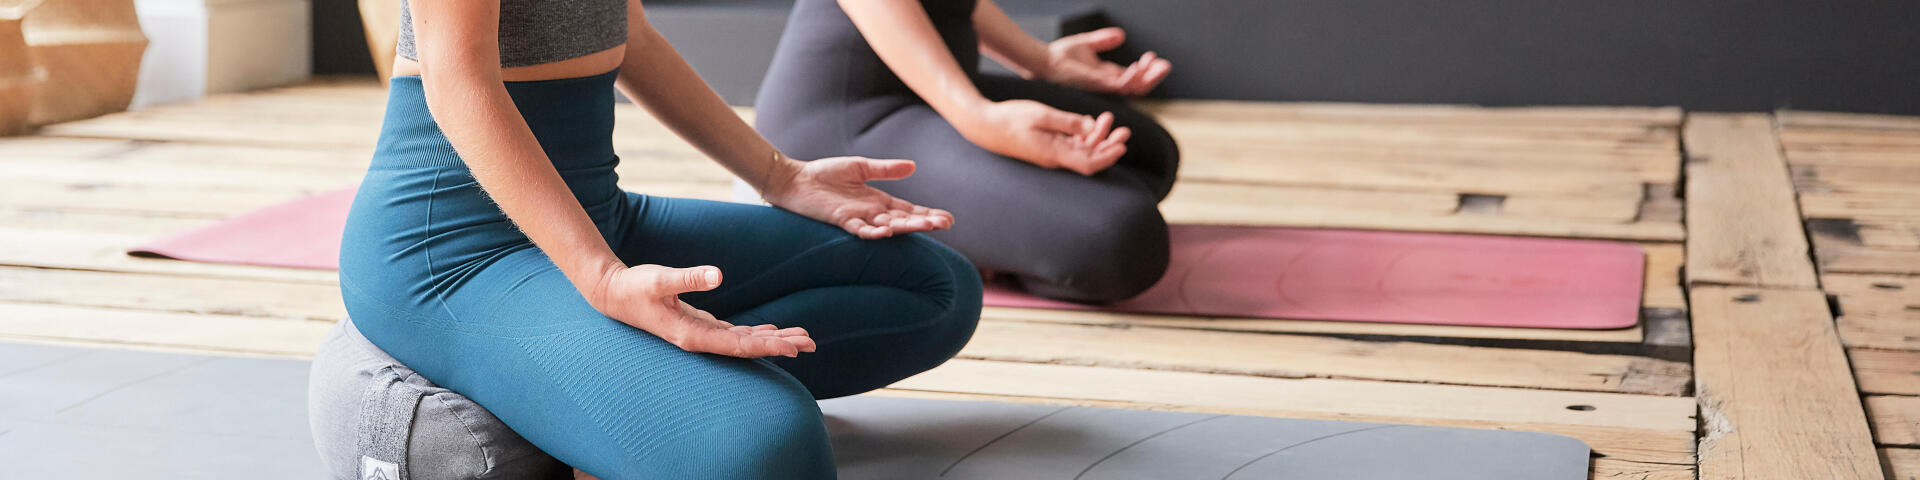 chassez le stress yoga header